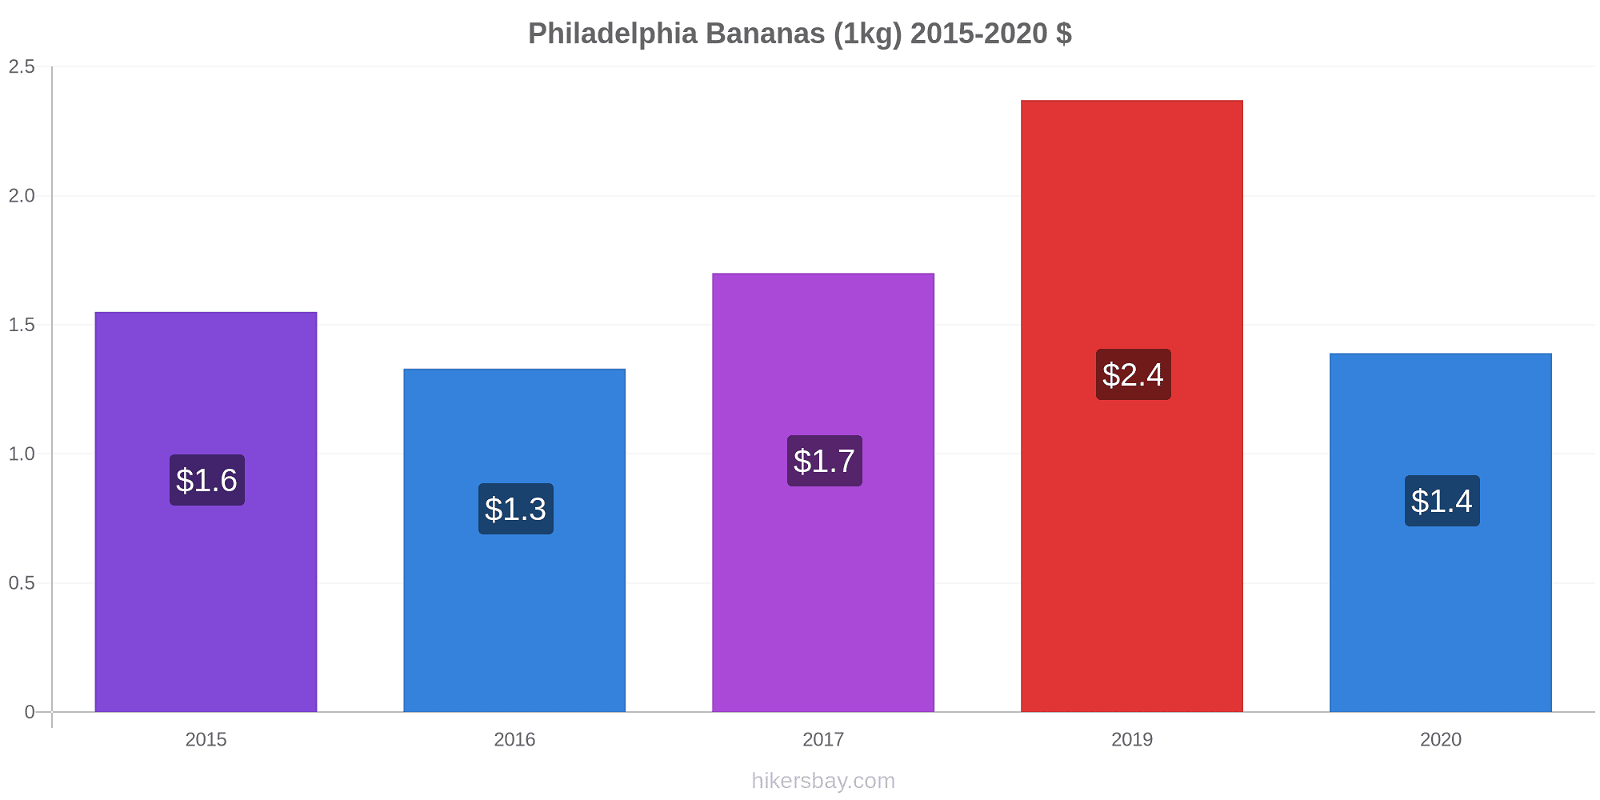 Philadelphia price changes Bananas (1kg) hikersbay.com